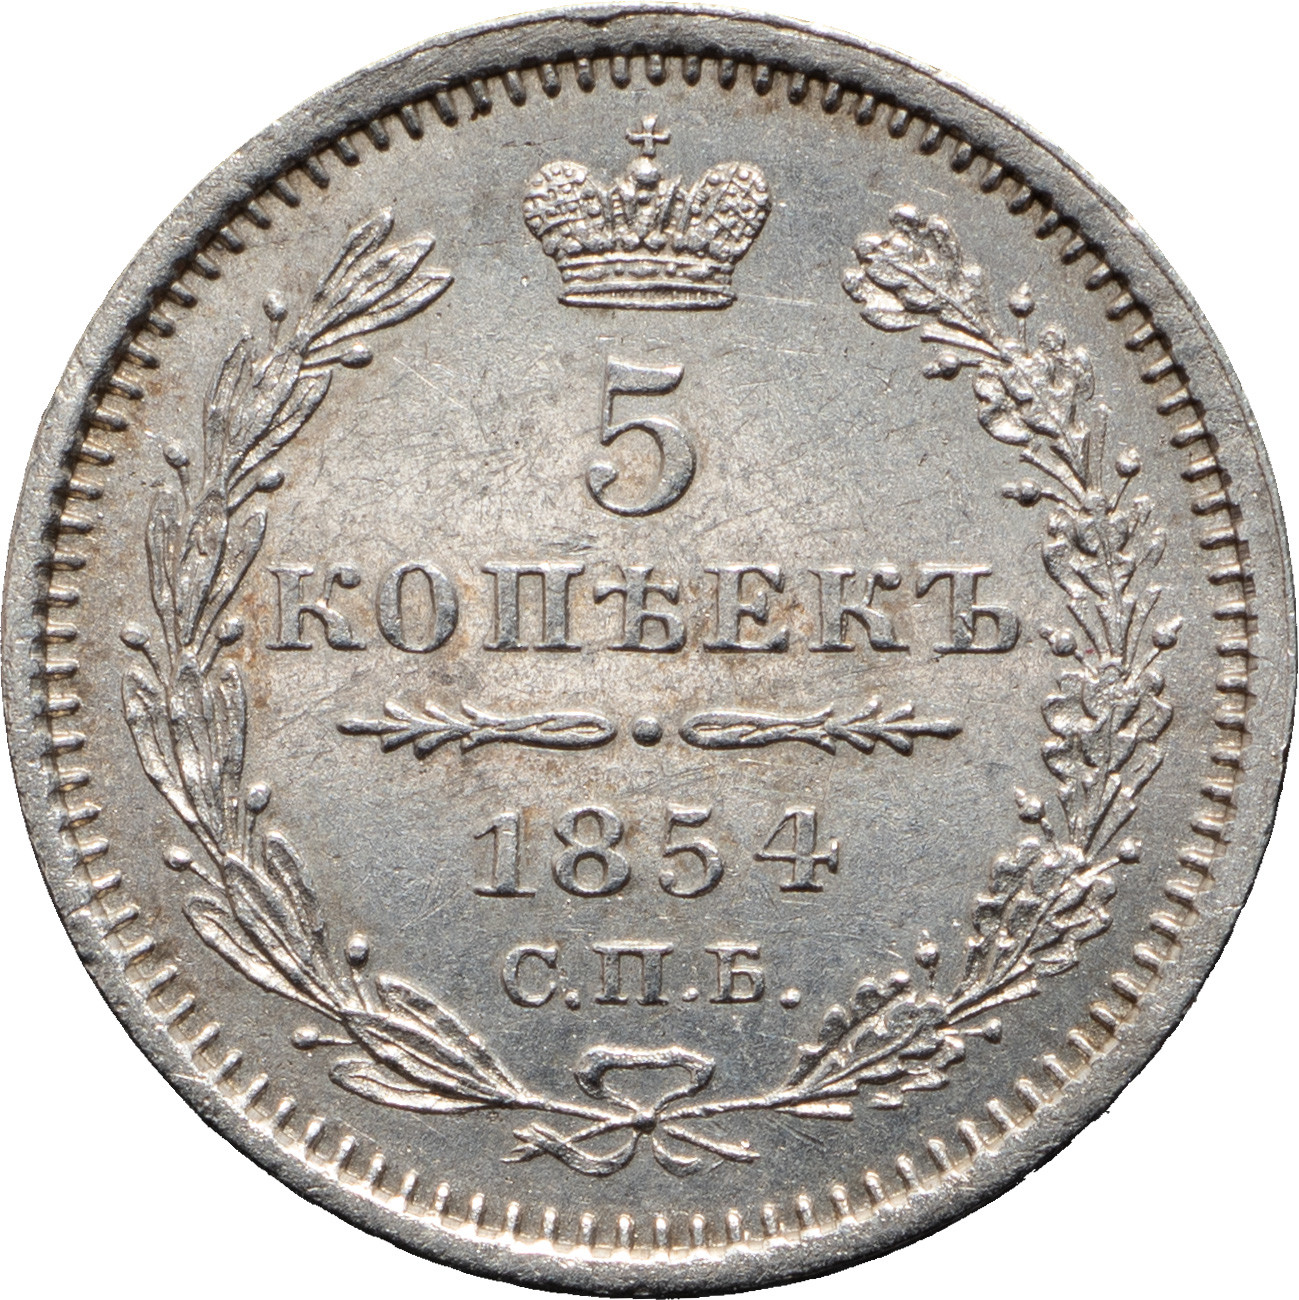 5 копеек 1854 года